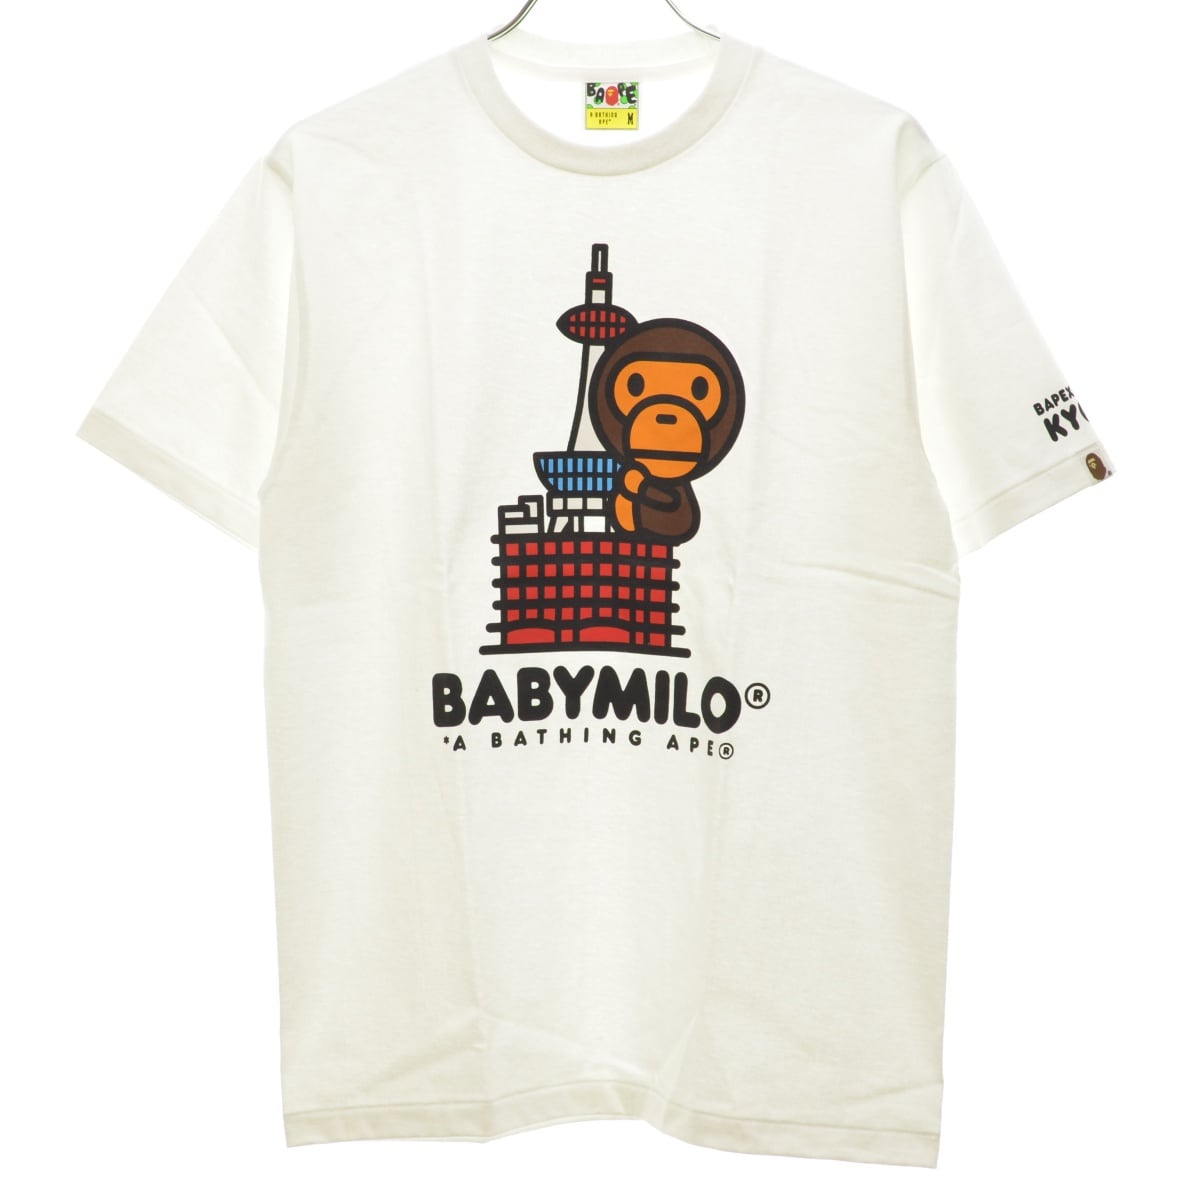 A BATHING APE / アベイシングエイプ KYOTO EXCLUSIVE BABY MILO 半袖Tシャツ bape | カンフル京都裏寺店  powered by BASE